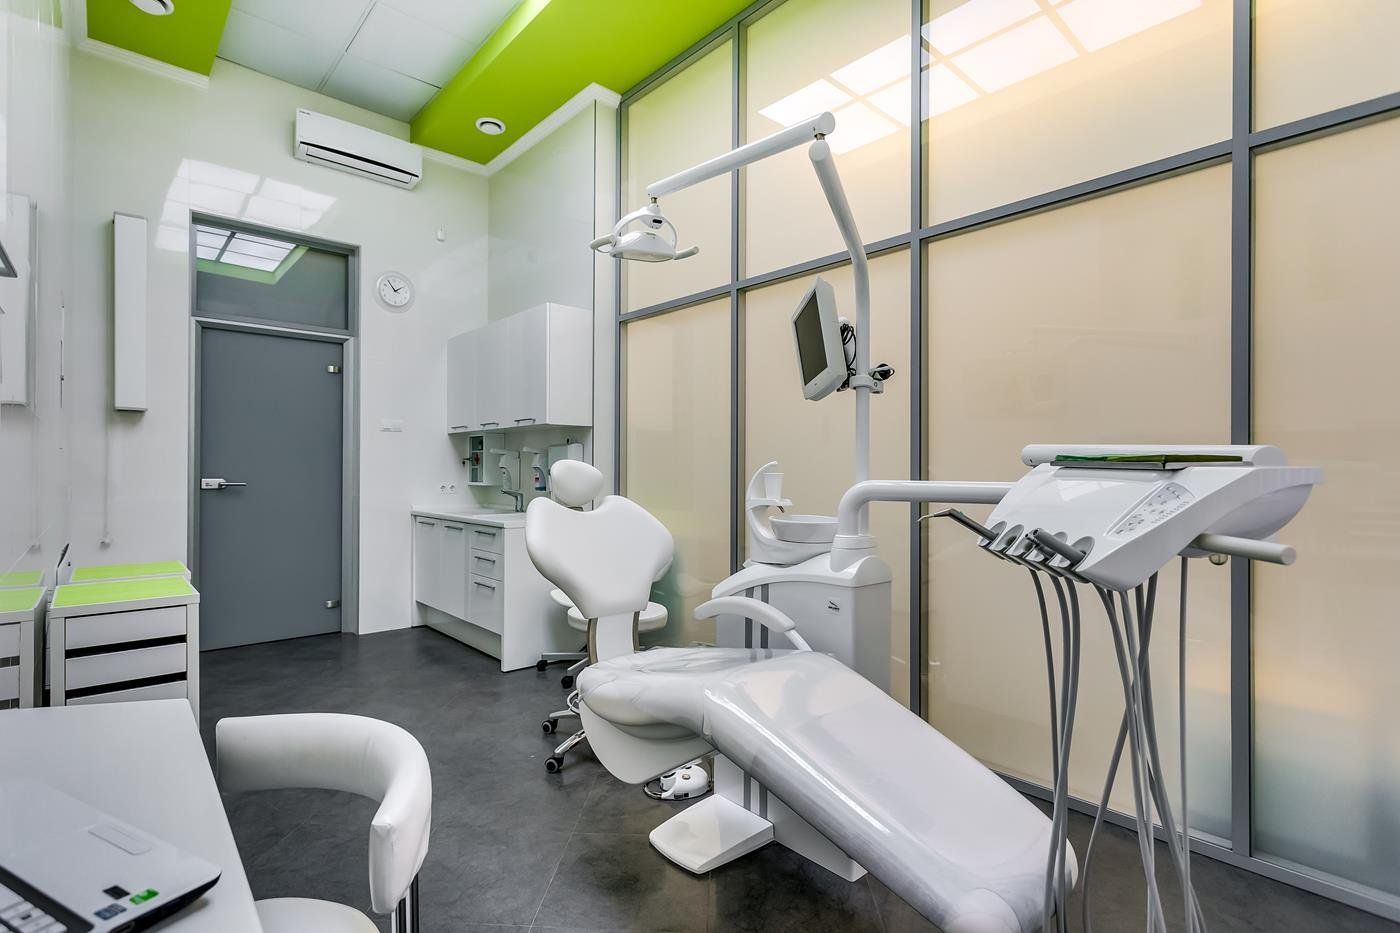 The best paid dental clinics for children in Nizhny Novgorod in 2022